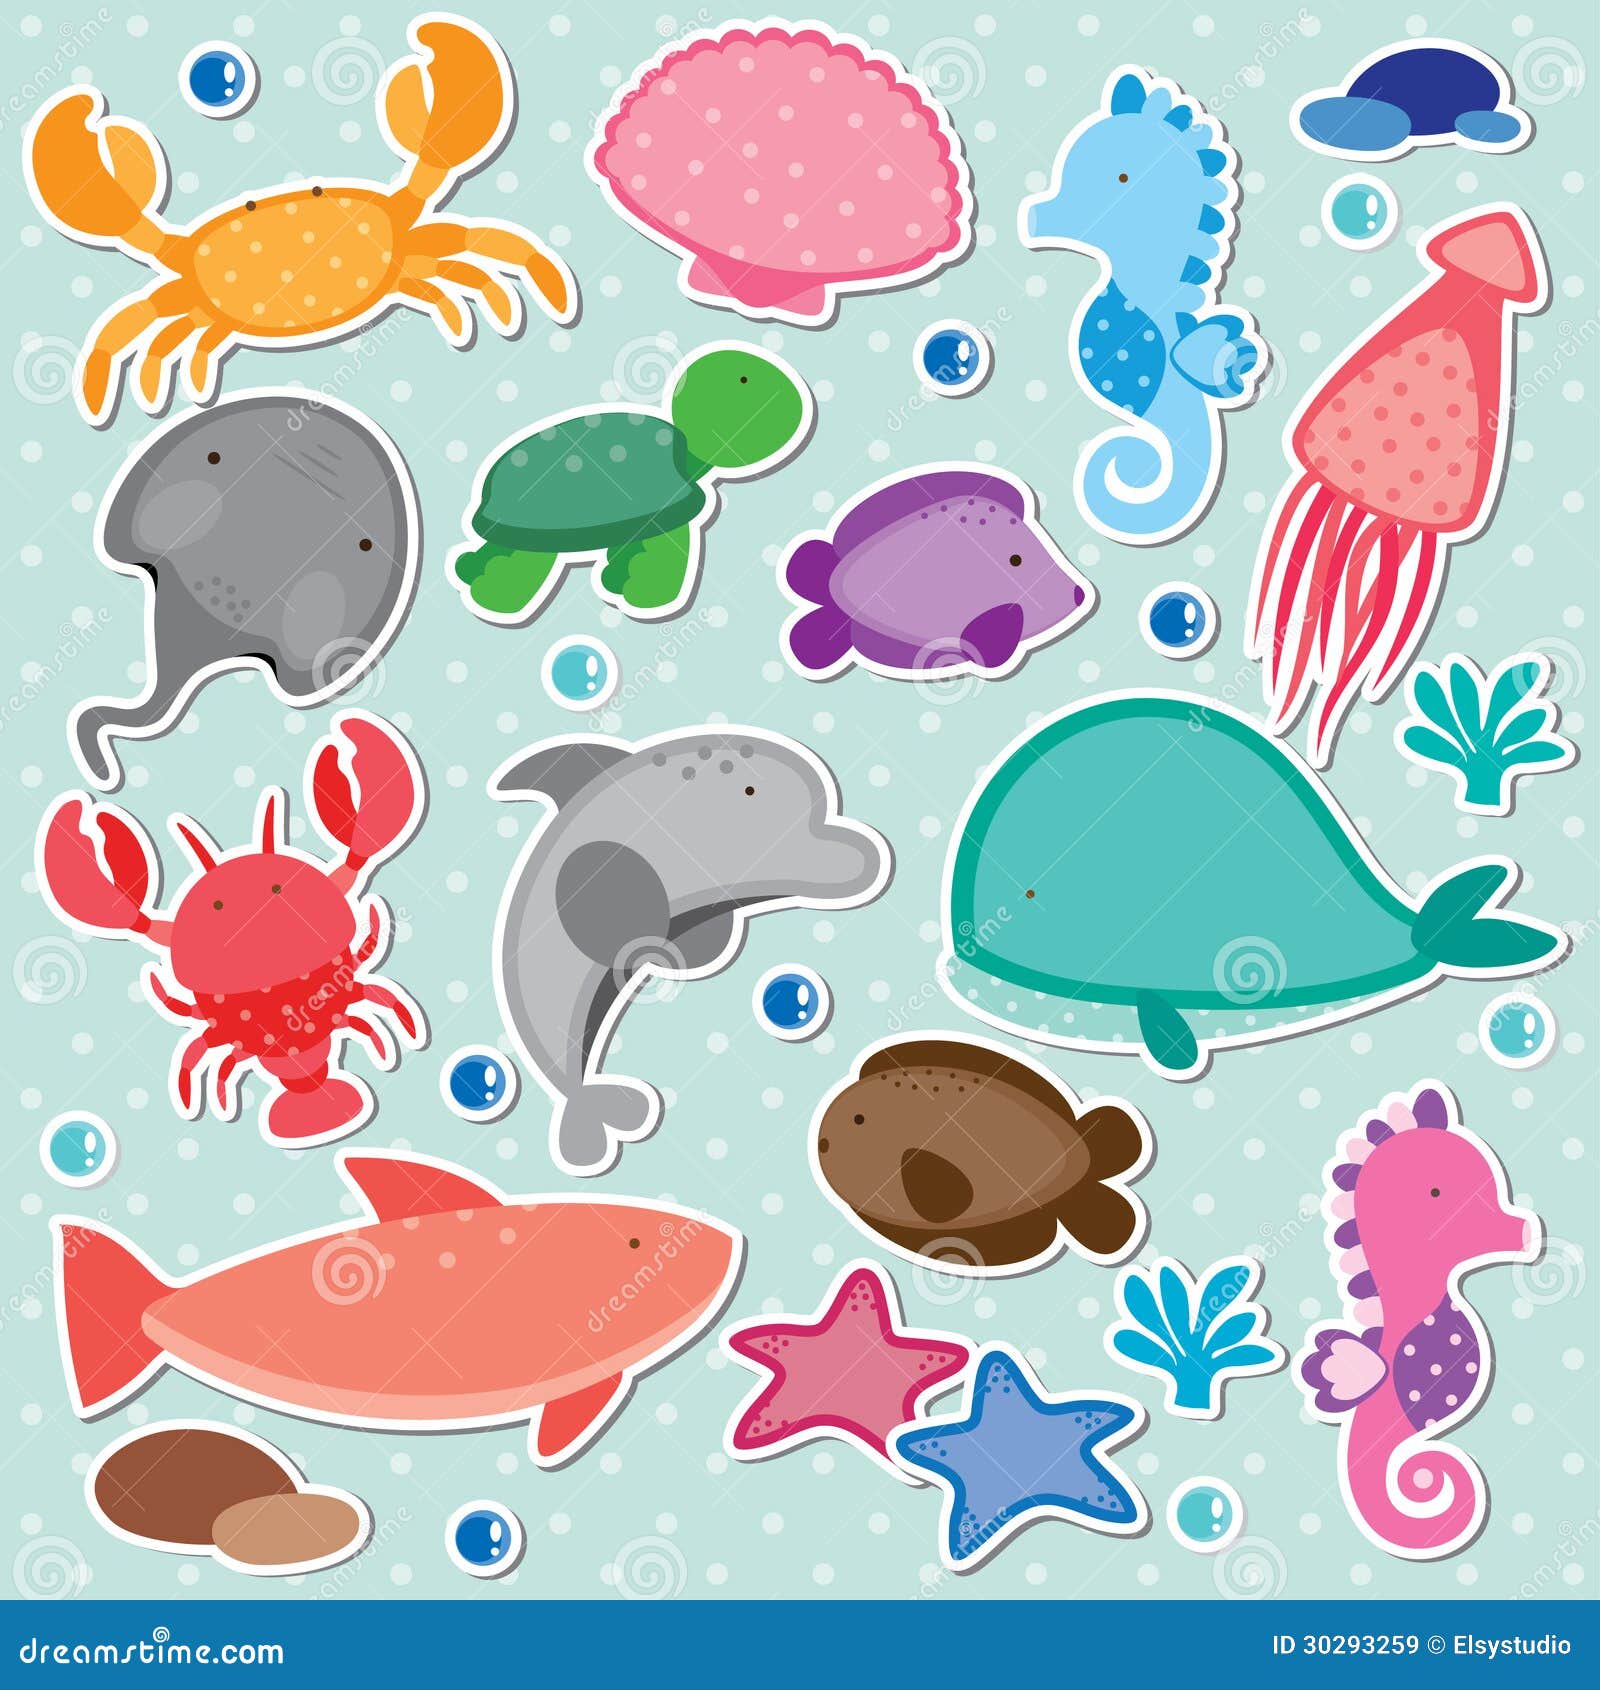 Under The Sea Clip Art Illustration 30293259 - Megapixl